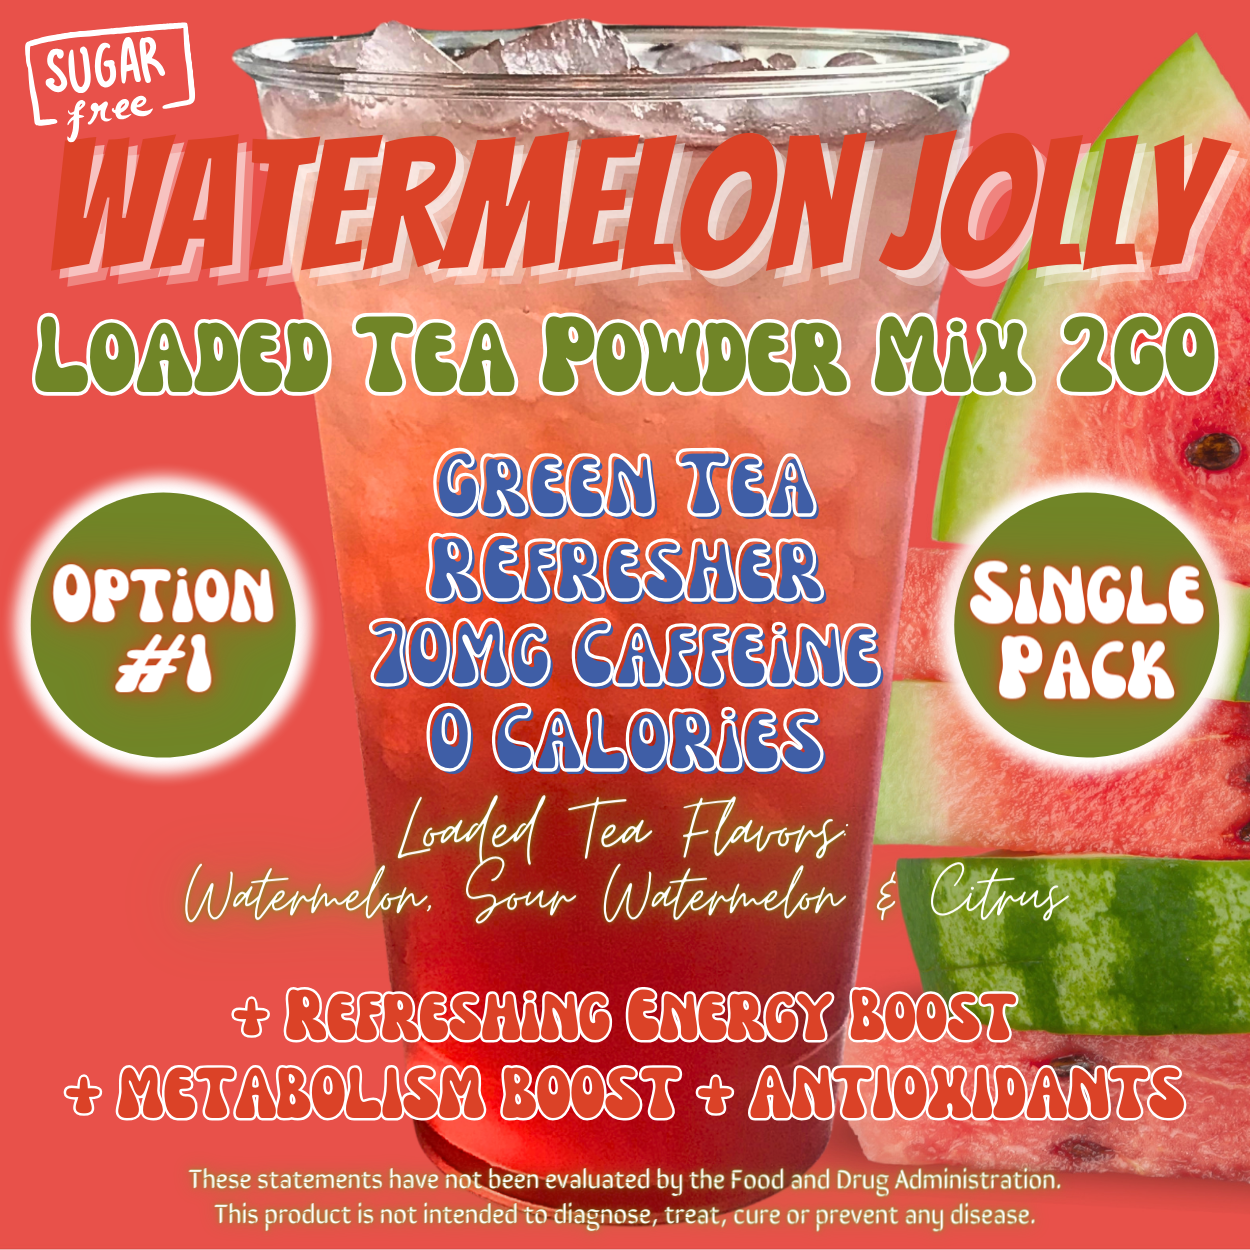 Watermelon Jolly: Loaded Tea Powder Mix 2GO Packets